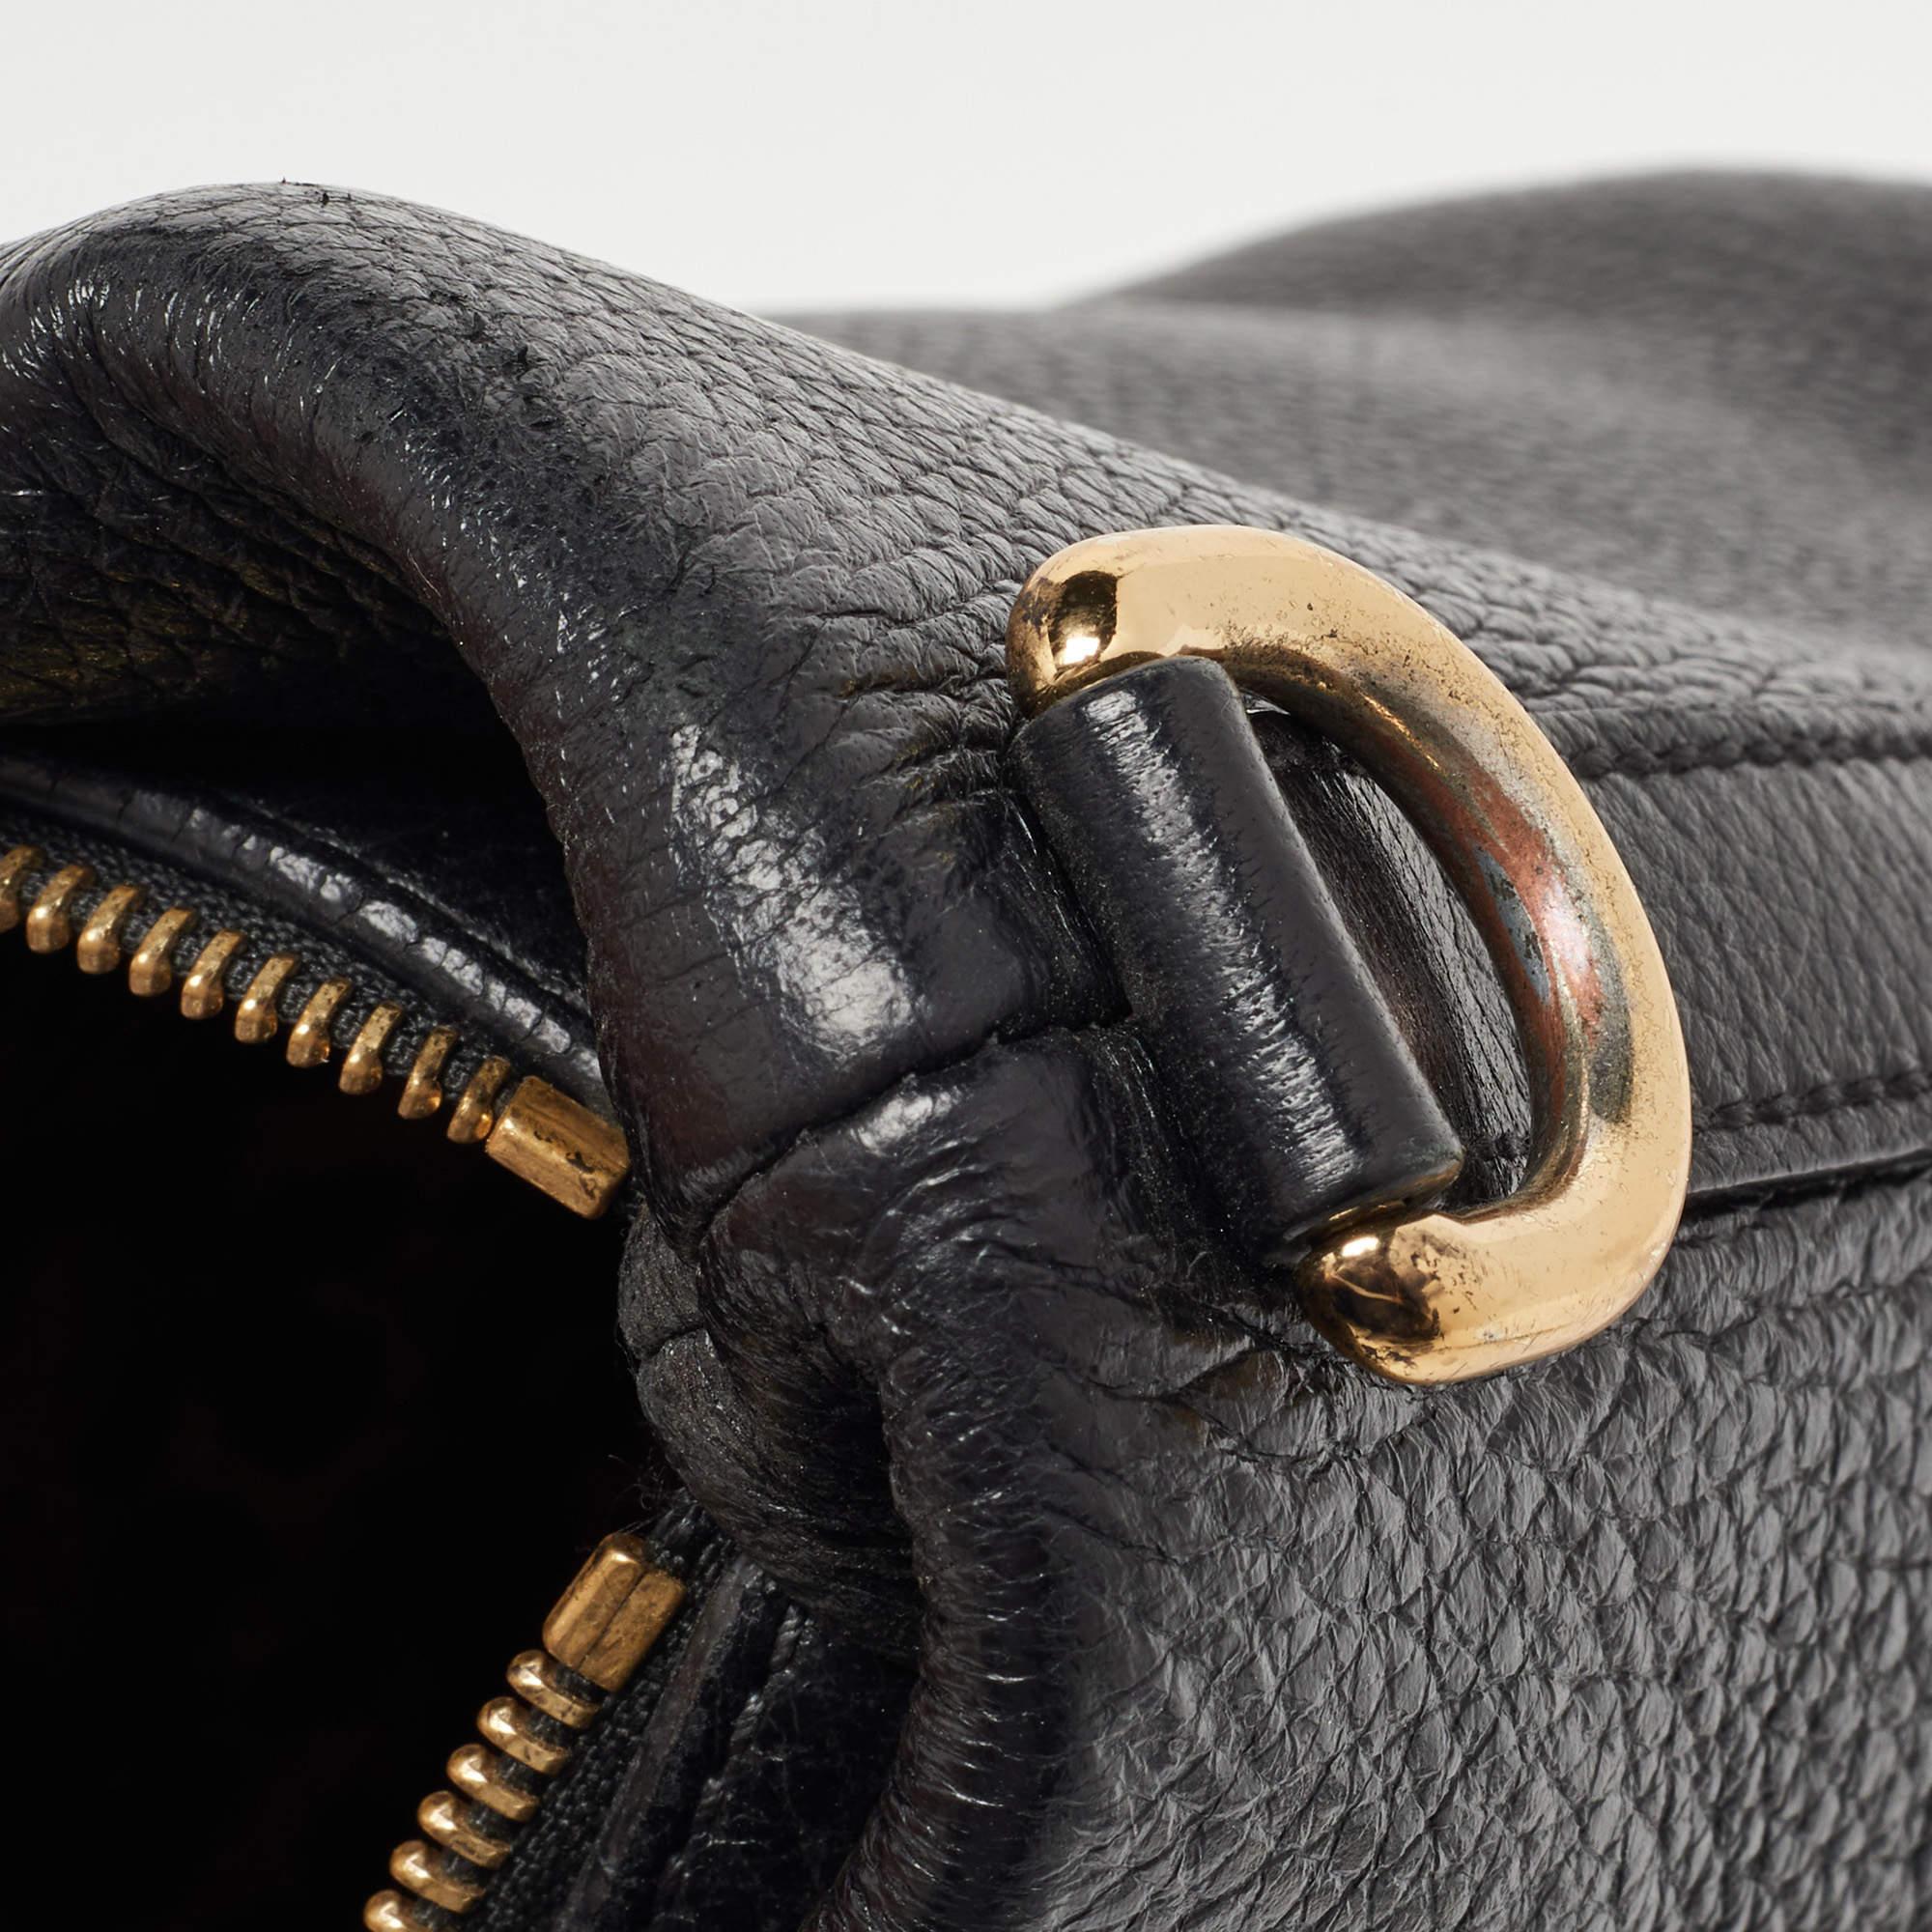 Dolce & Gabbana Black Soft Leather Bucket Bag For Sale 6